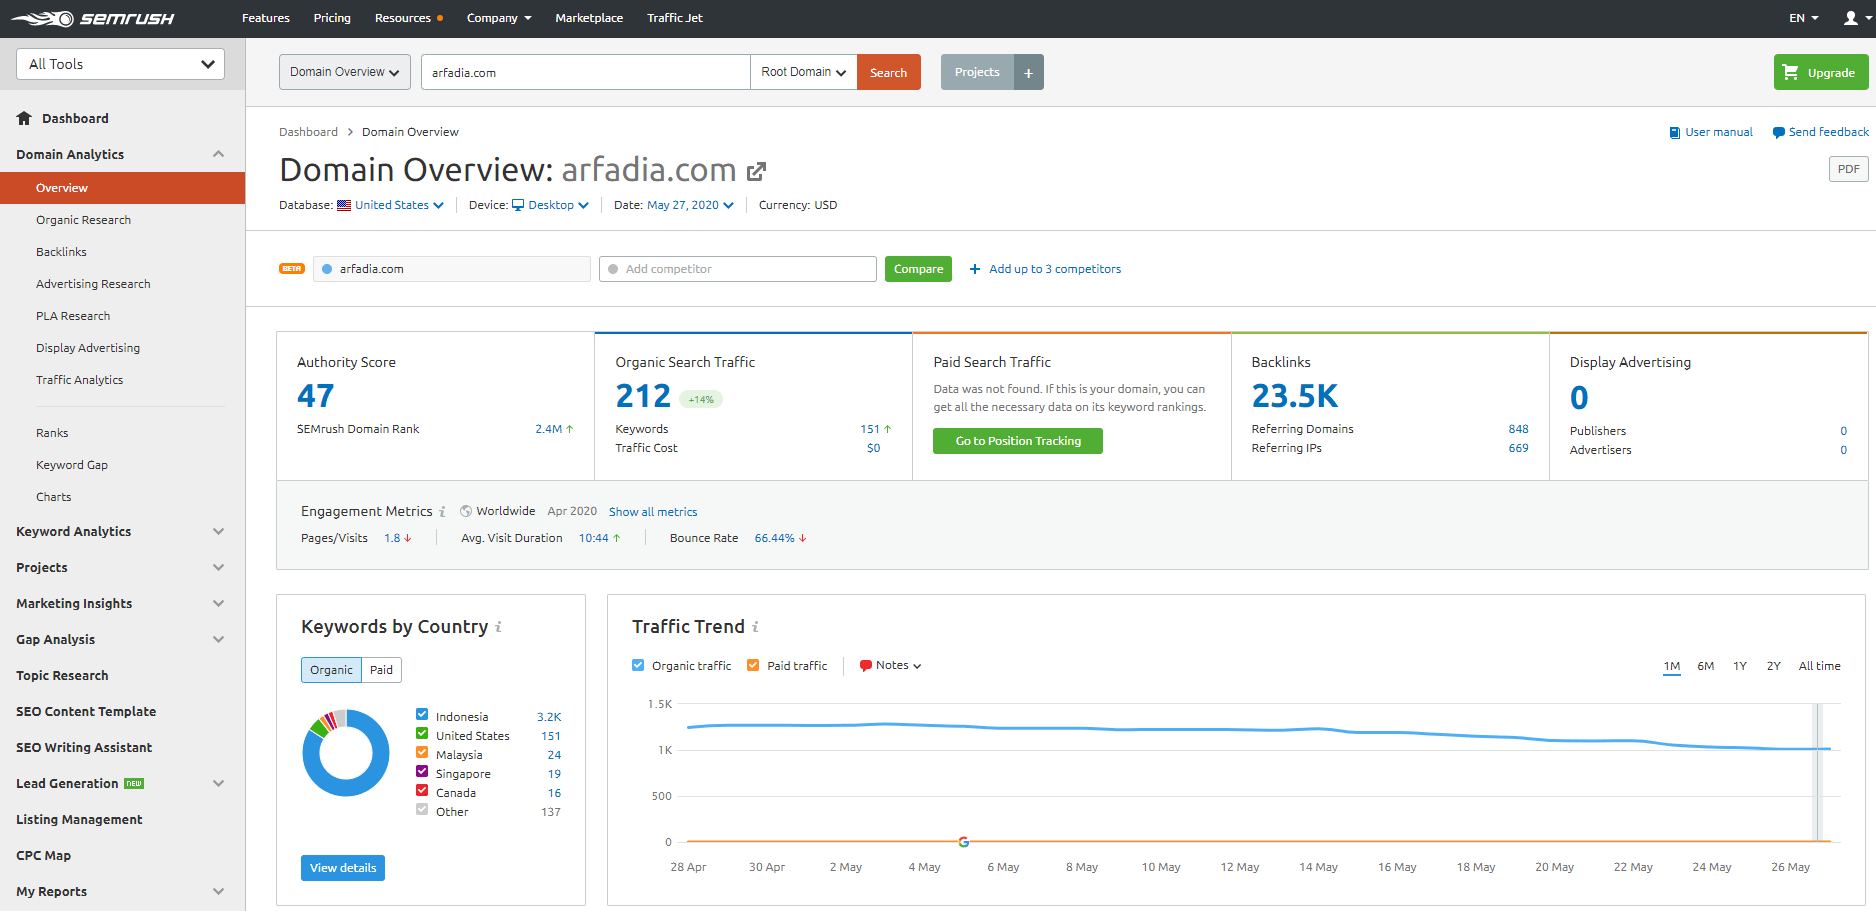 Tampilan SEMrush untuk Website Arfadia.com